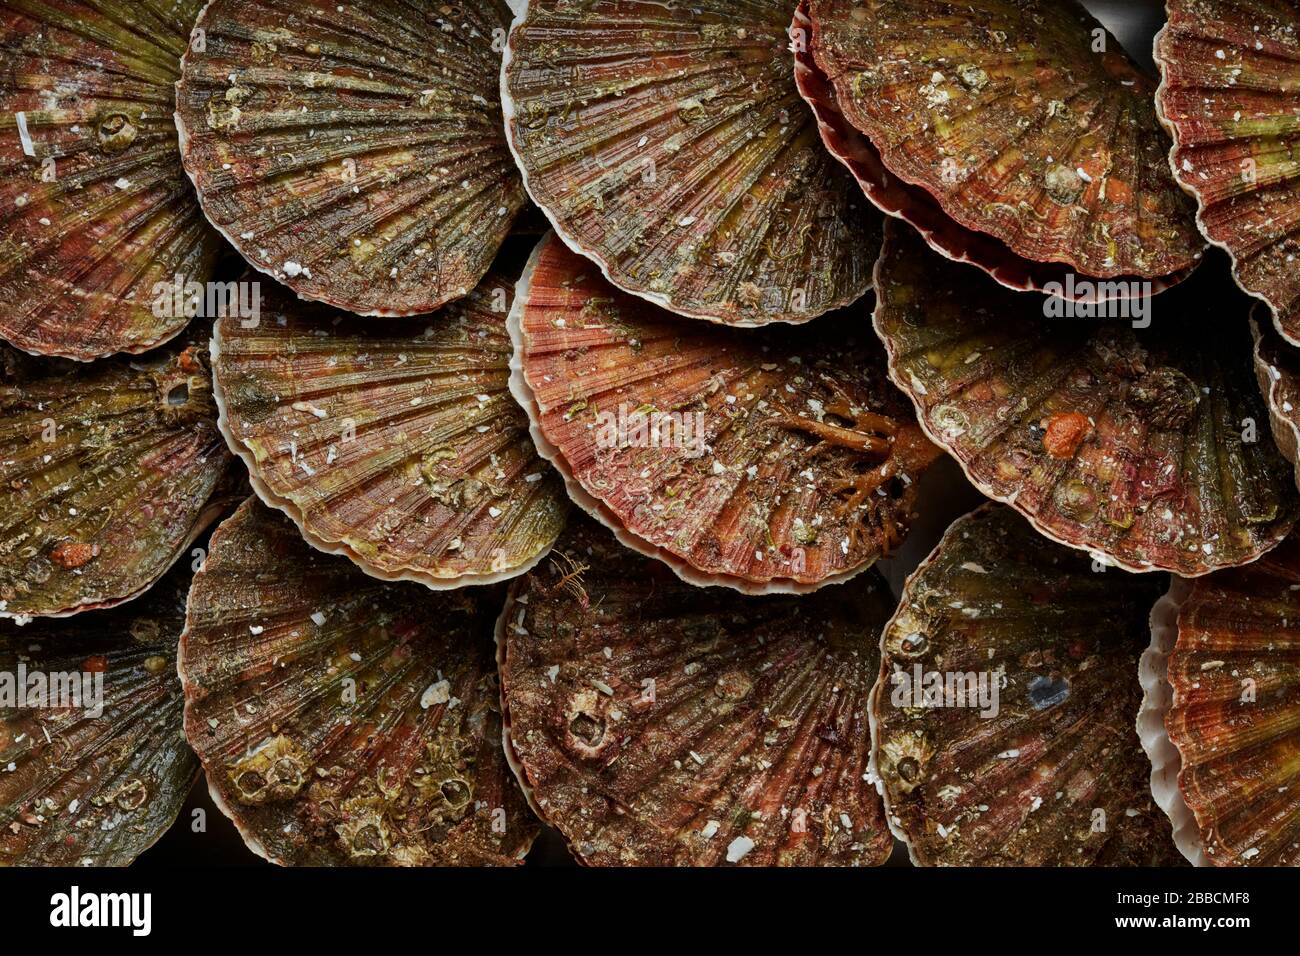 Jakobsmuscheln aus Meeresfrüchteschalen Stockfoto